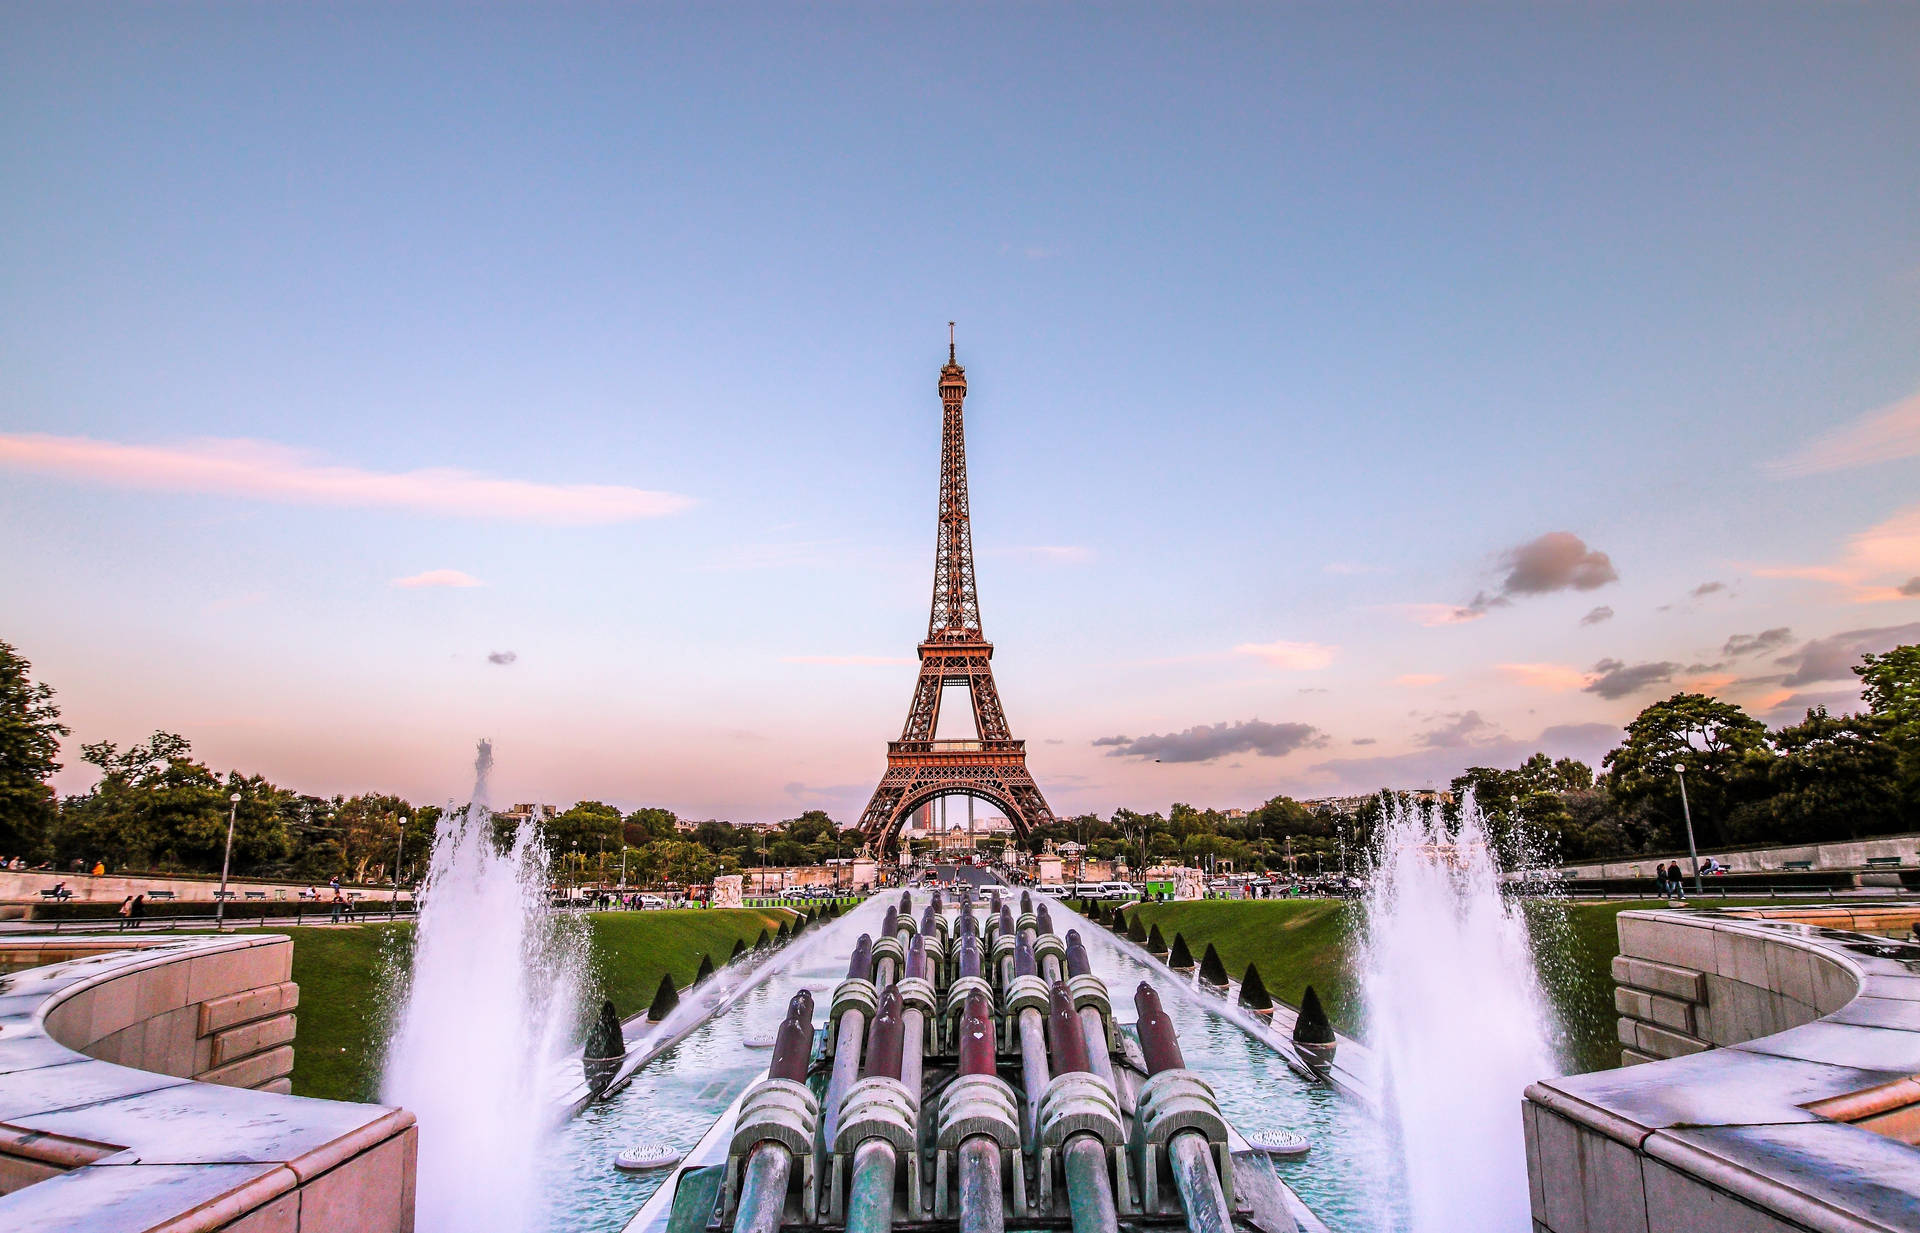 Paris Fountain Of Warsaw Trocadéro Gardens Background